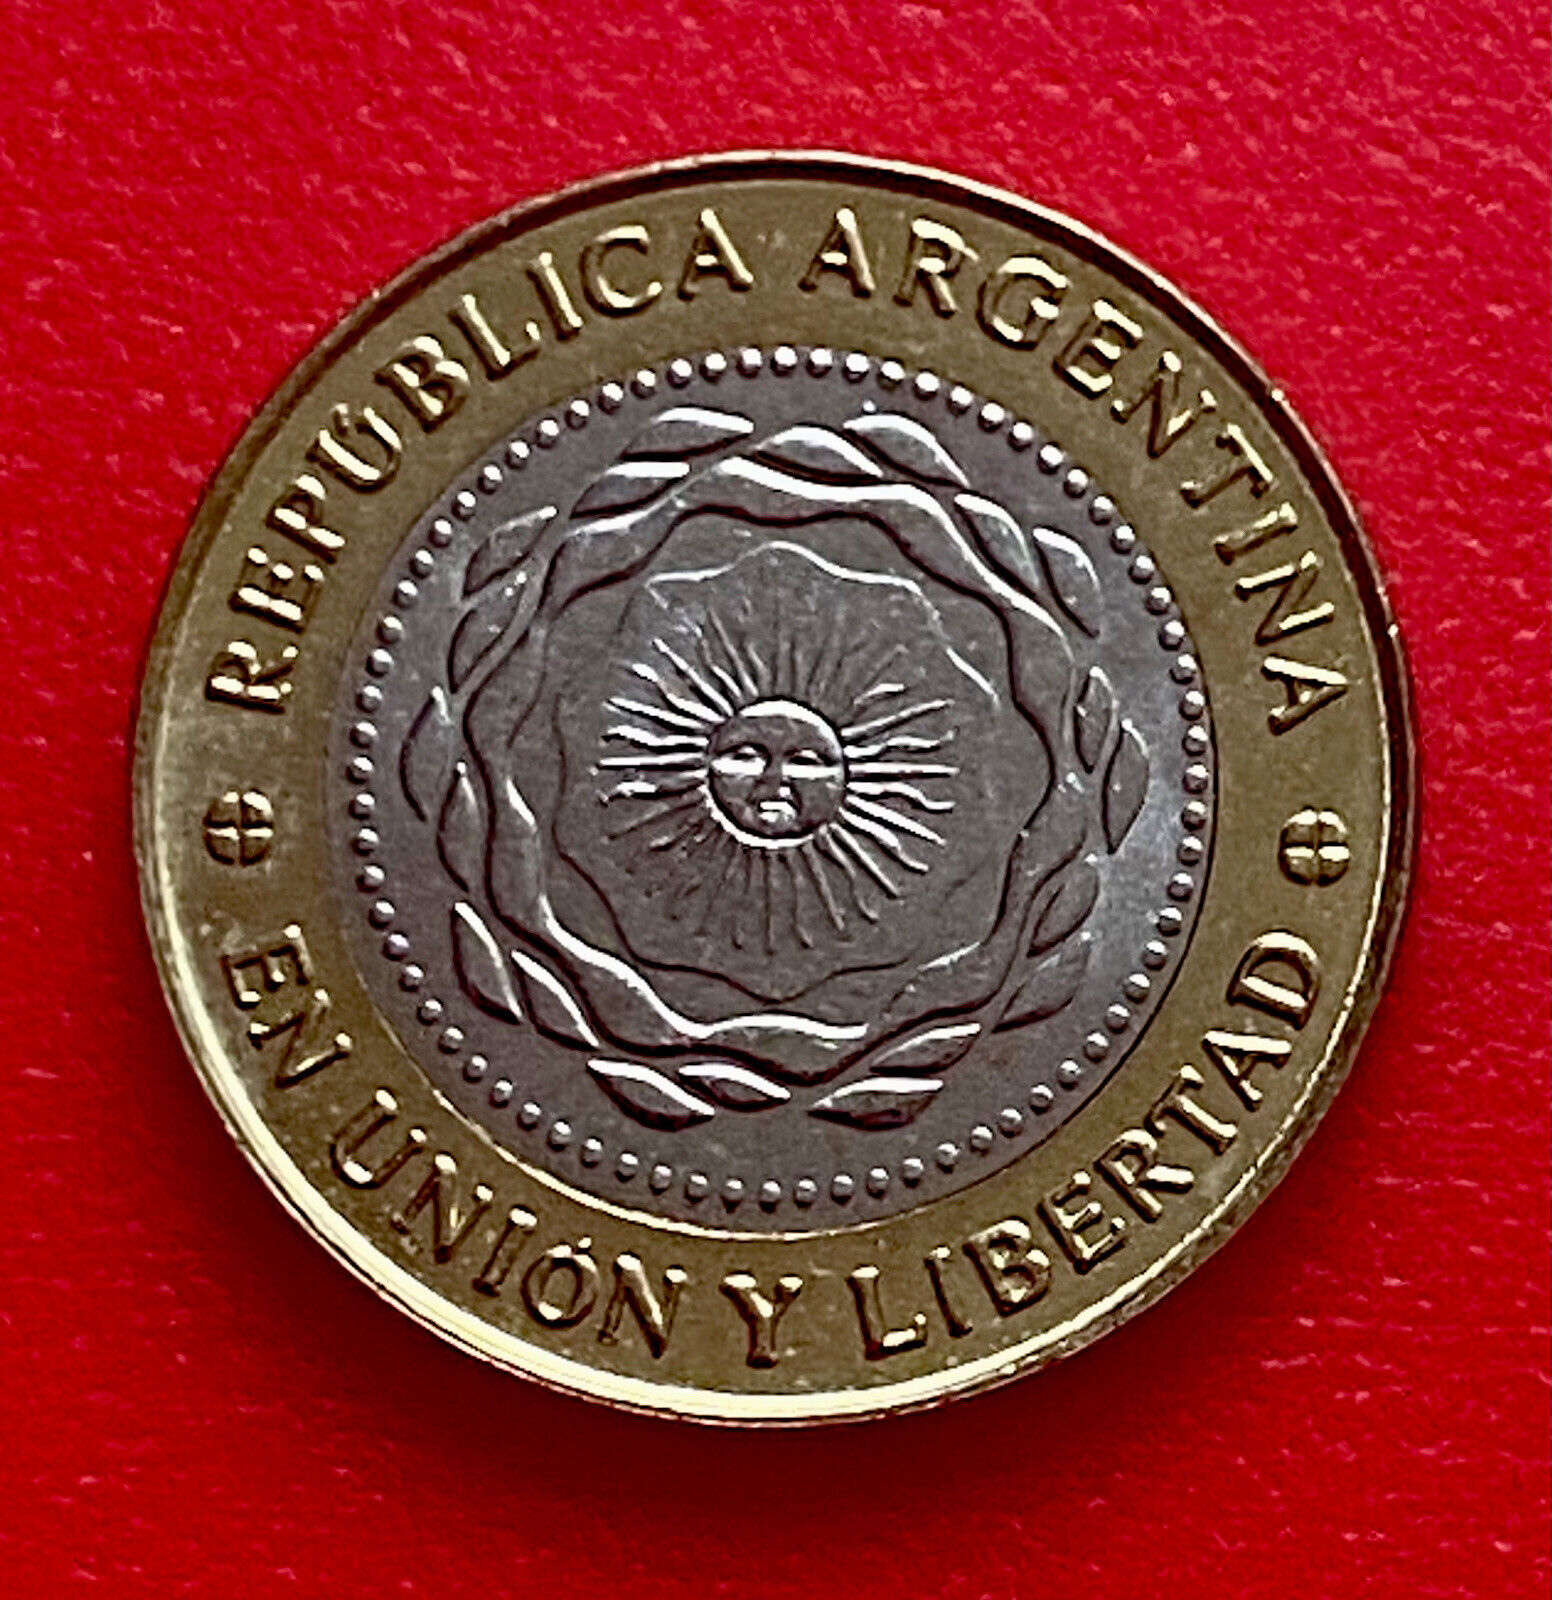 Argentina 2 pesos 2015 ( BI-Metallic ) High Grade Coin